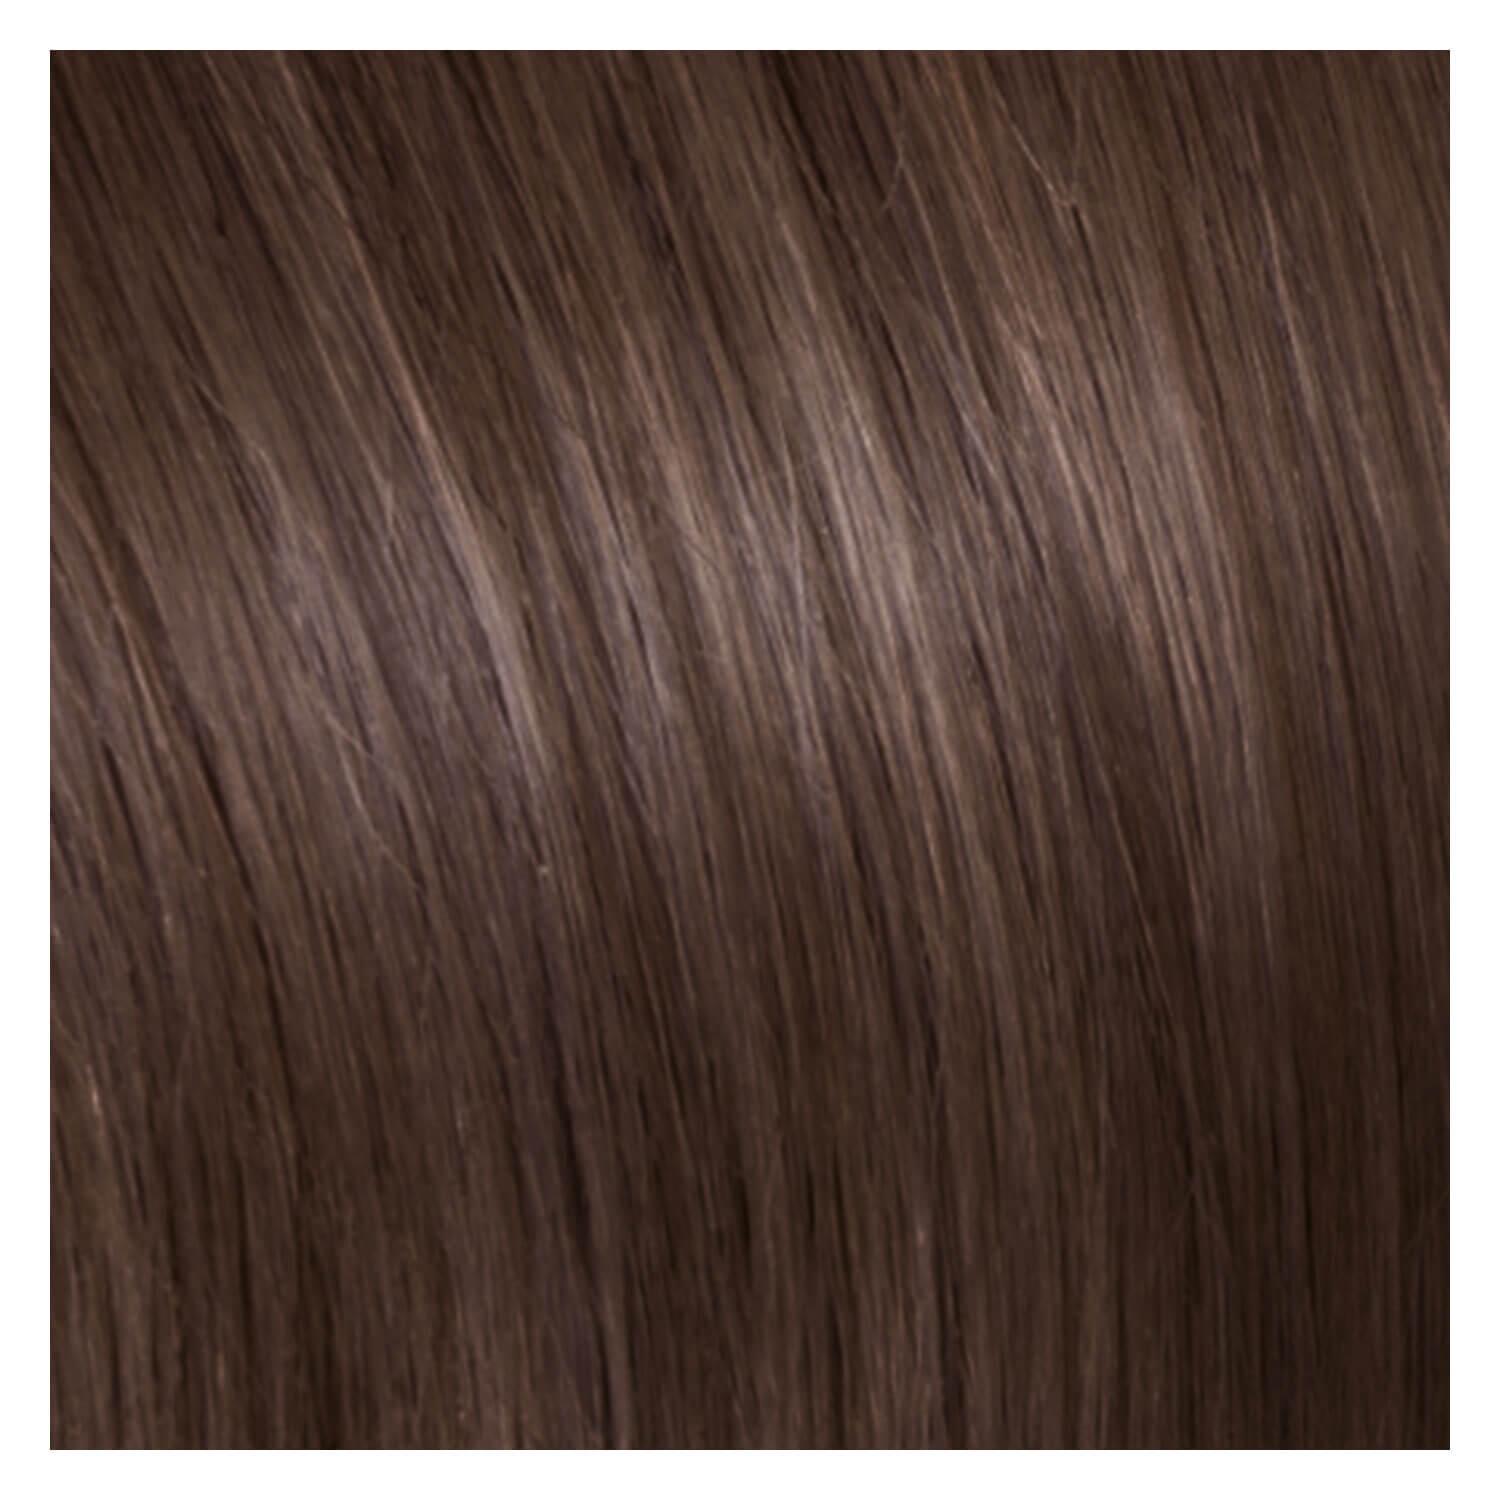 SHE Bonding-System Hair Extensions Wavy - 10 Cendre Blond Clair 55/60cm